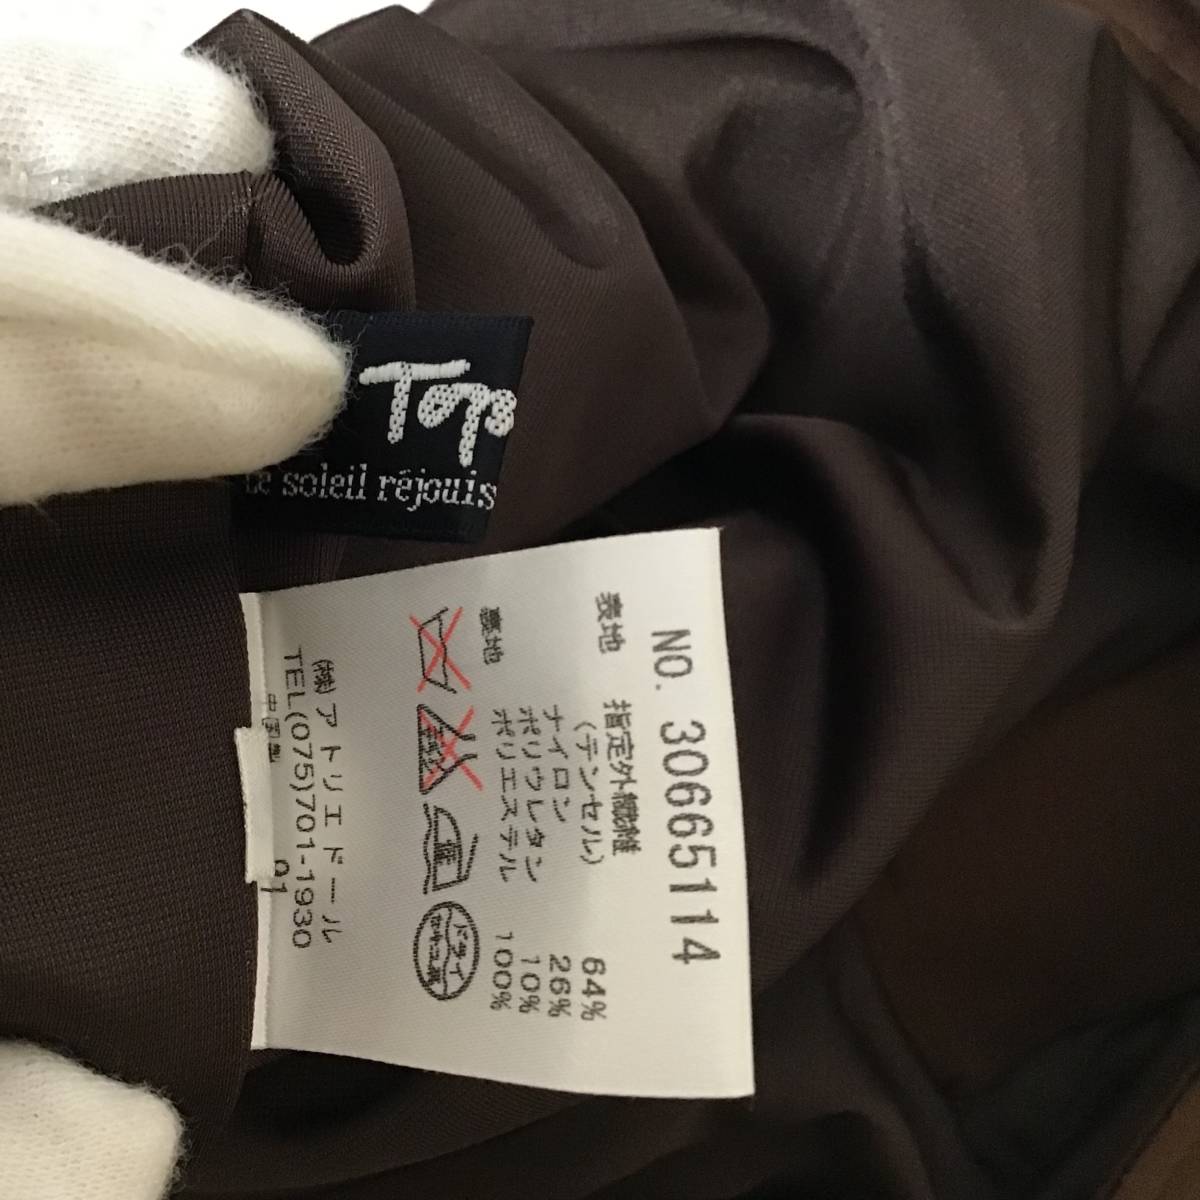 A335*TOPYS |topi-z следы lie кукла шорты прекрасный товар Brown размер 42